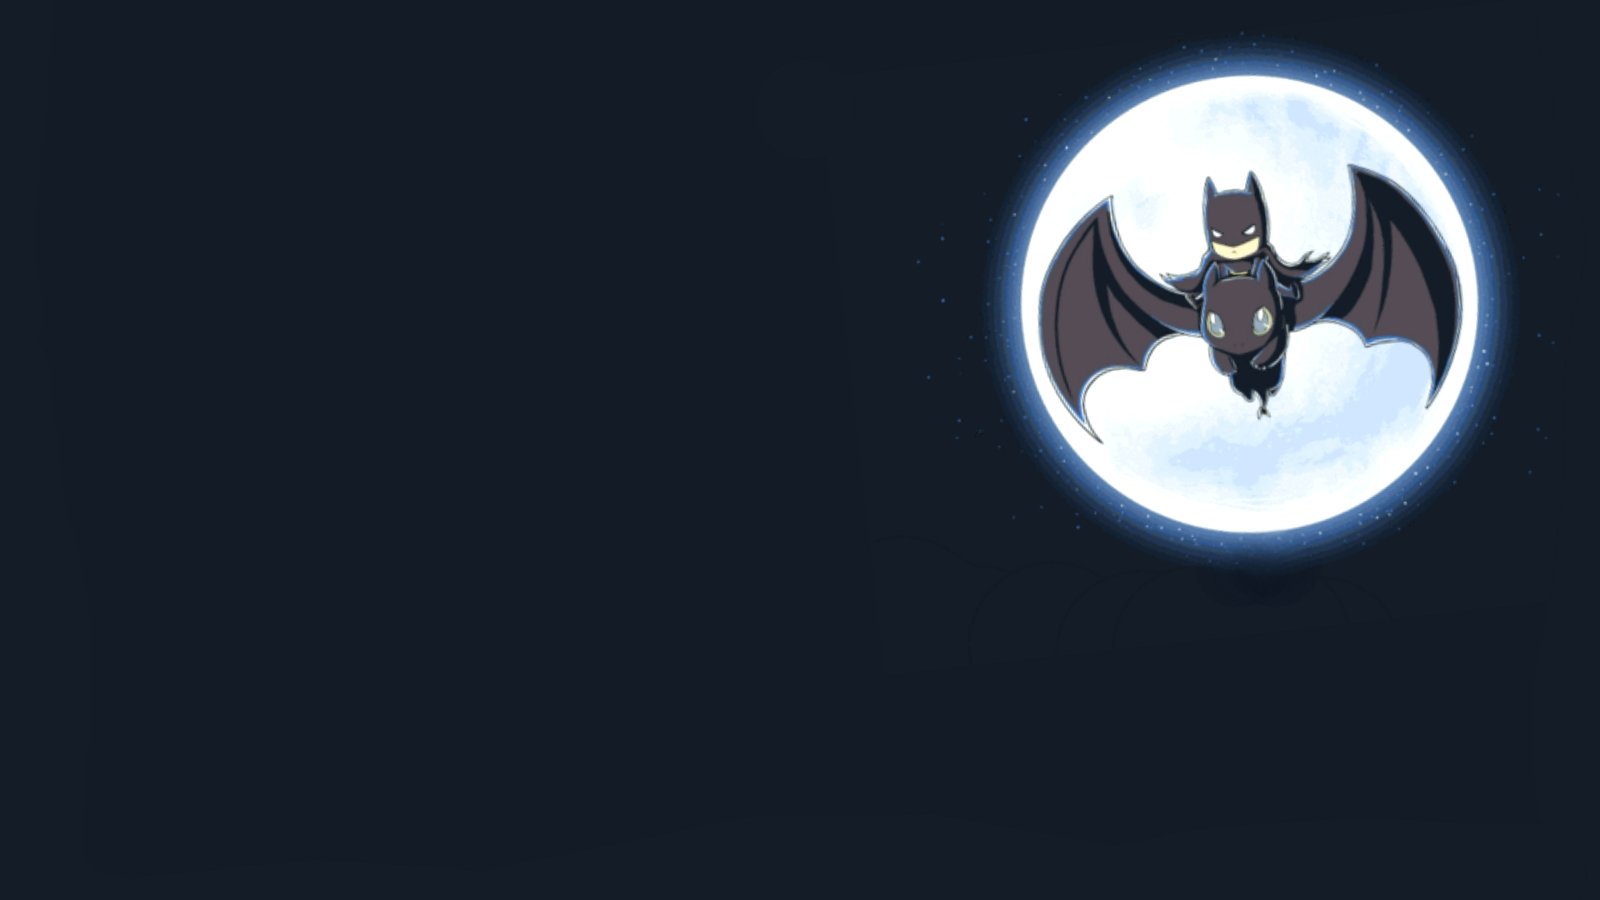 Download hd 1600x900 Batman desktop background ID:42007 for free